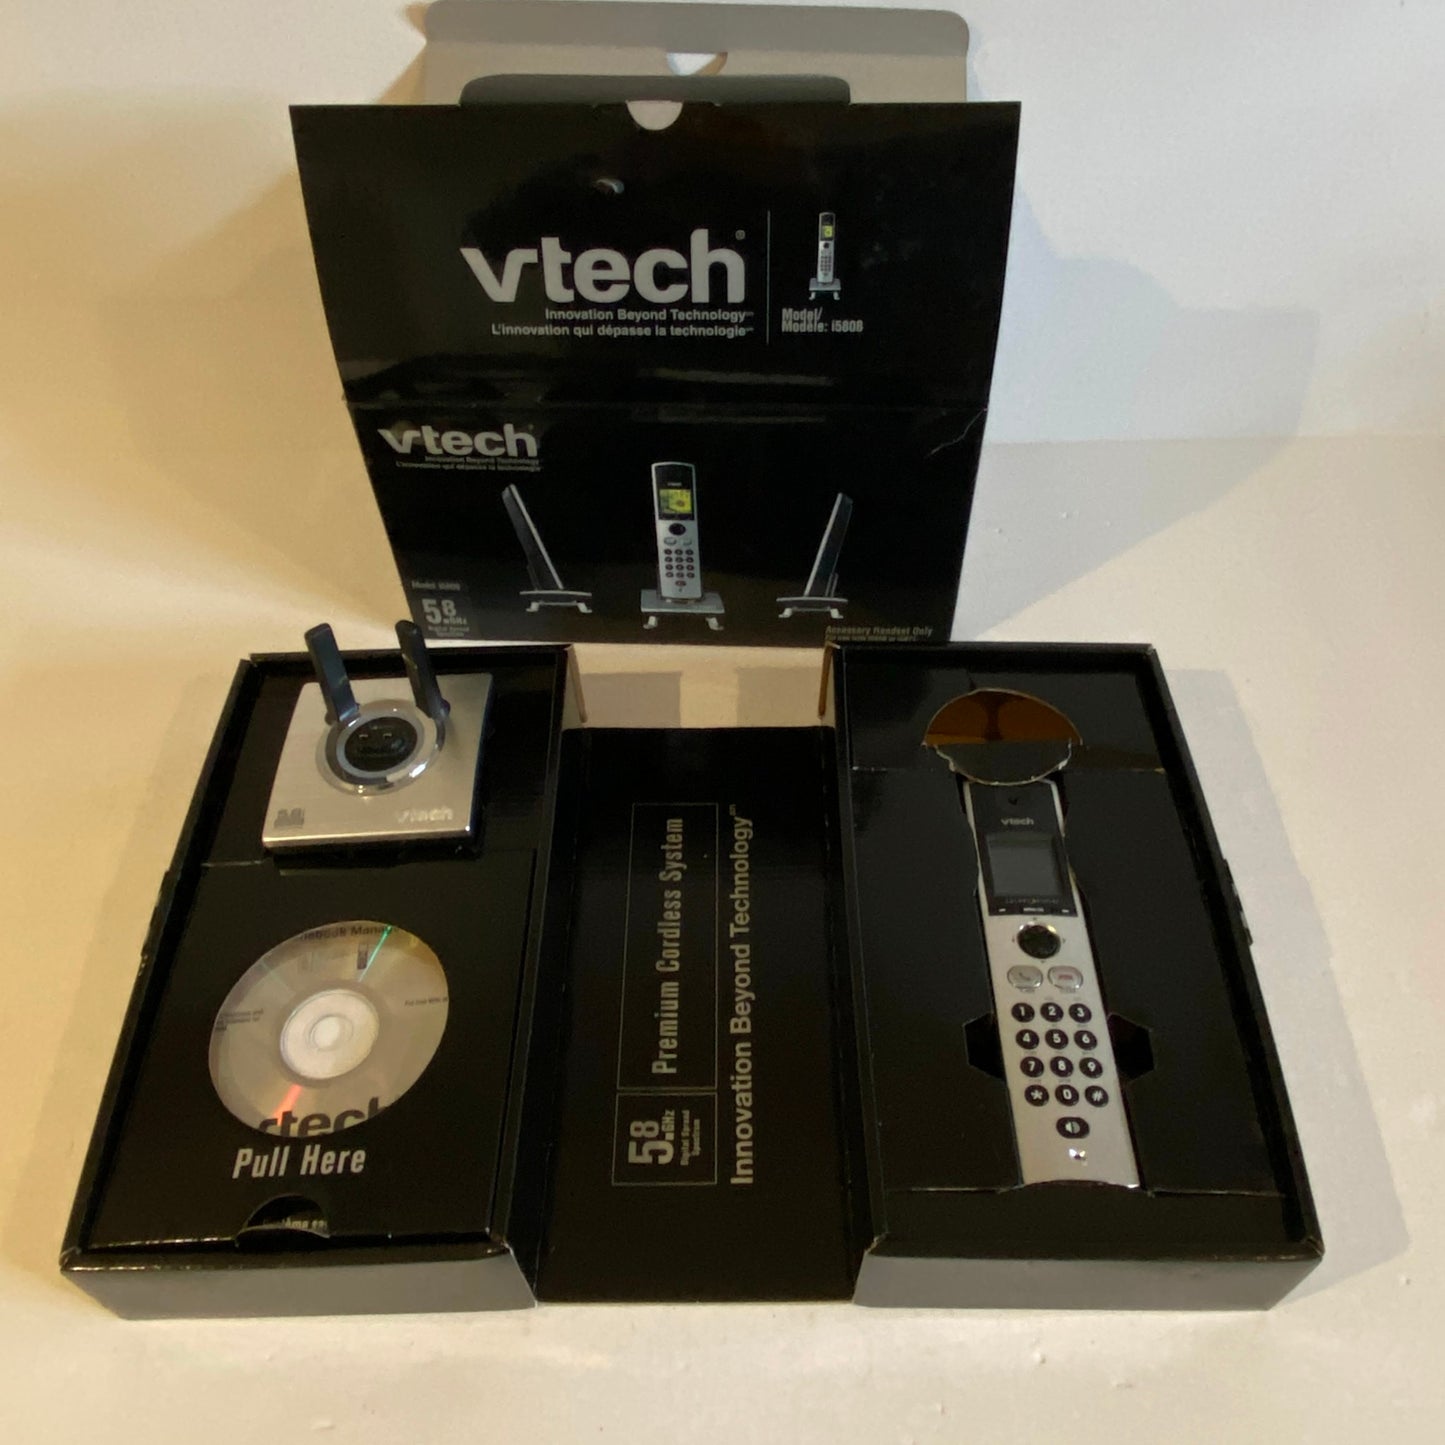 Vtech 5.8 Ghz Cordless Phone Extra Handset for i5858 or i5871